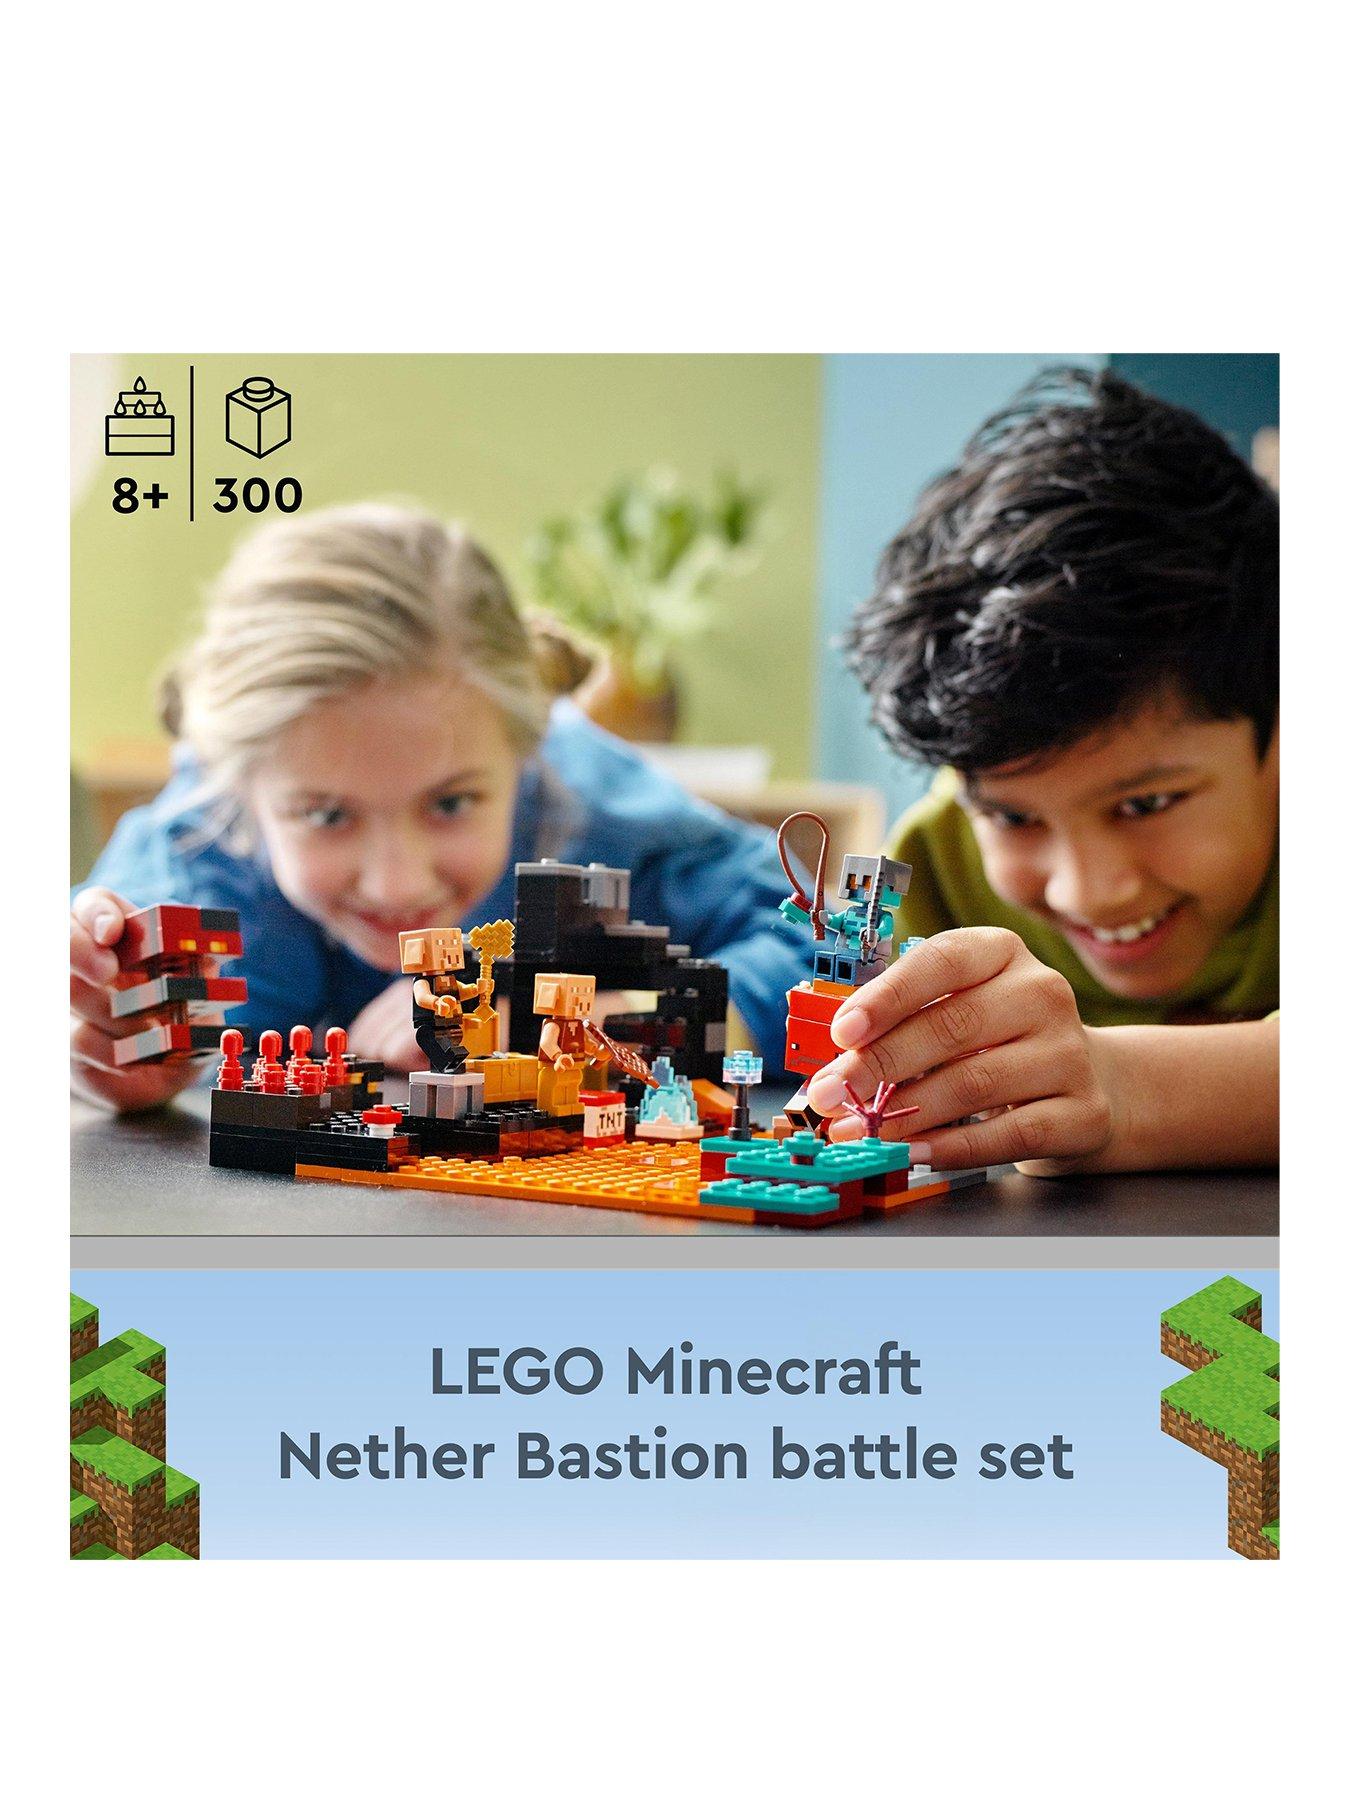 LEGO Minecraft The Nether Bastion